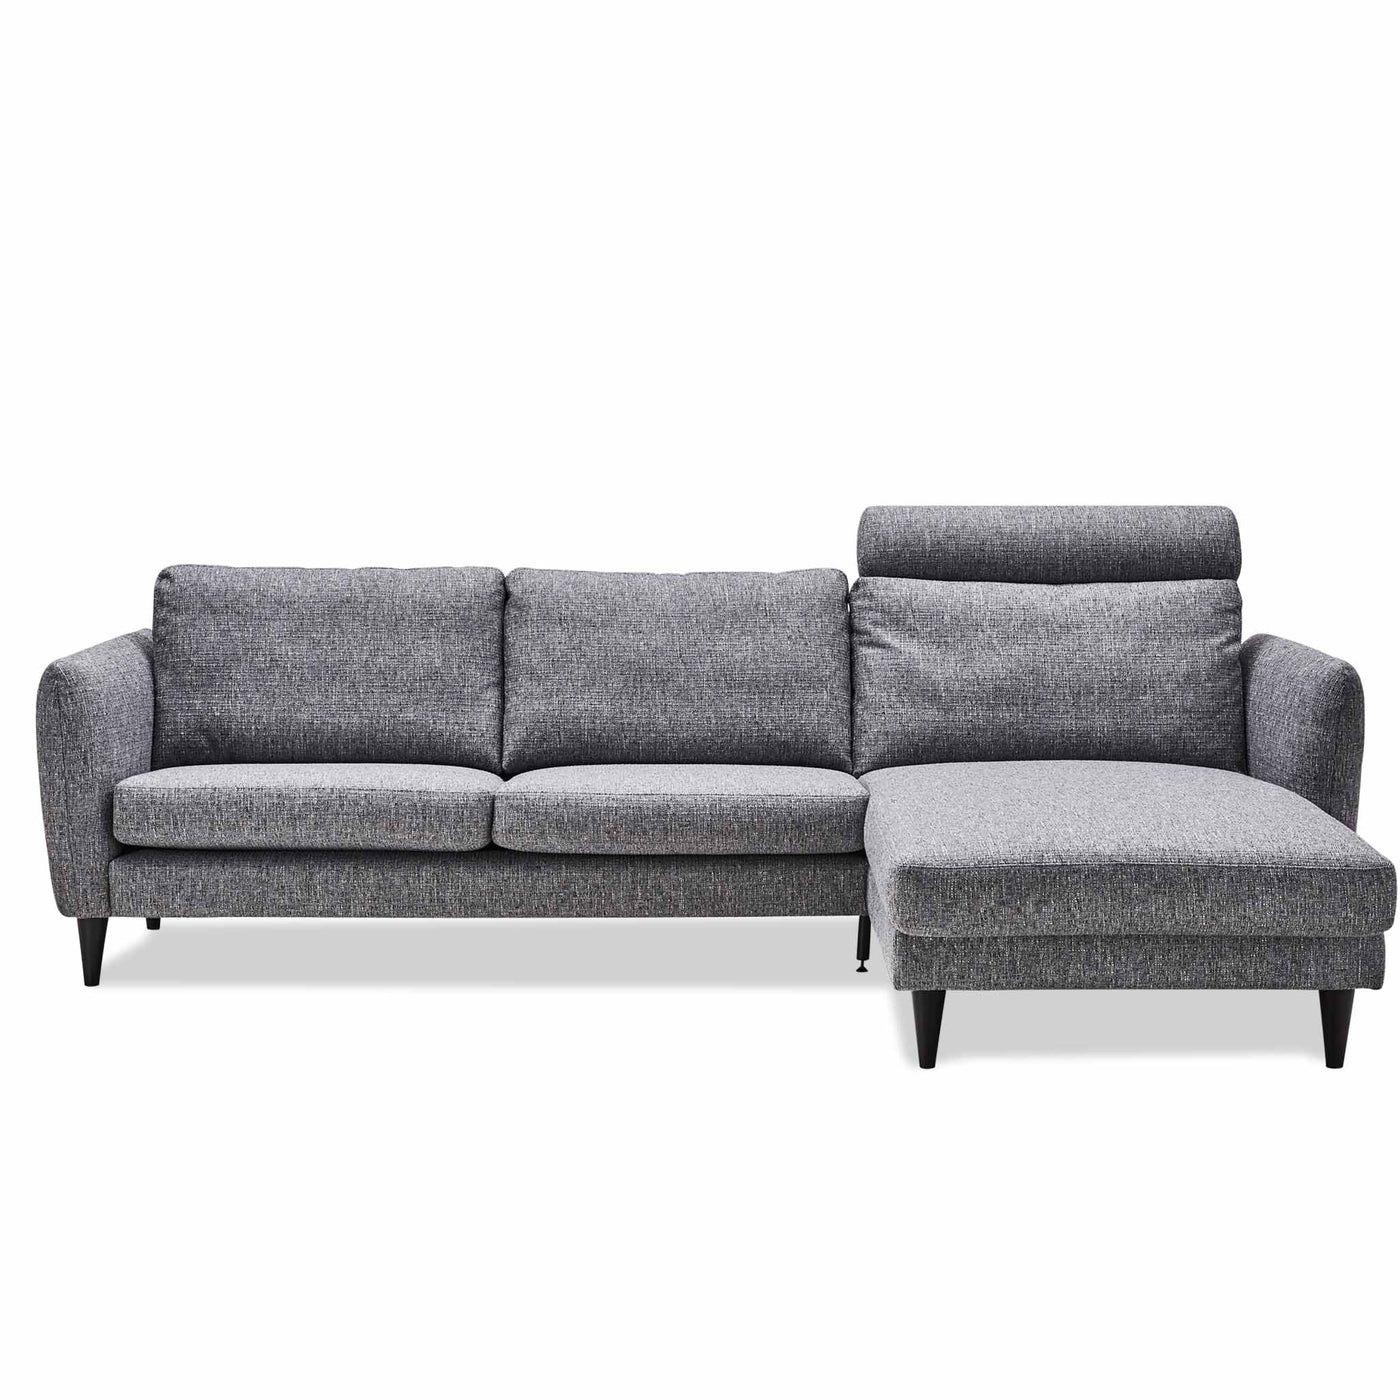 Skyline chaiselong sofa fra Hjort Knudsen monteret med slidstærkt gråt Chronotex møbelstof med sorte runde ben i eg